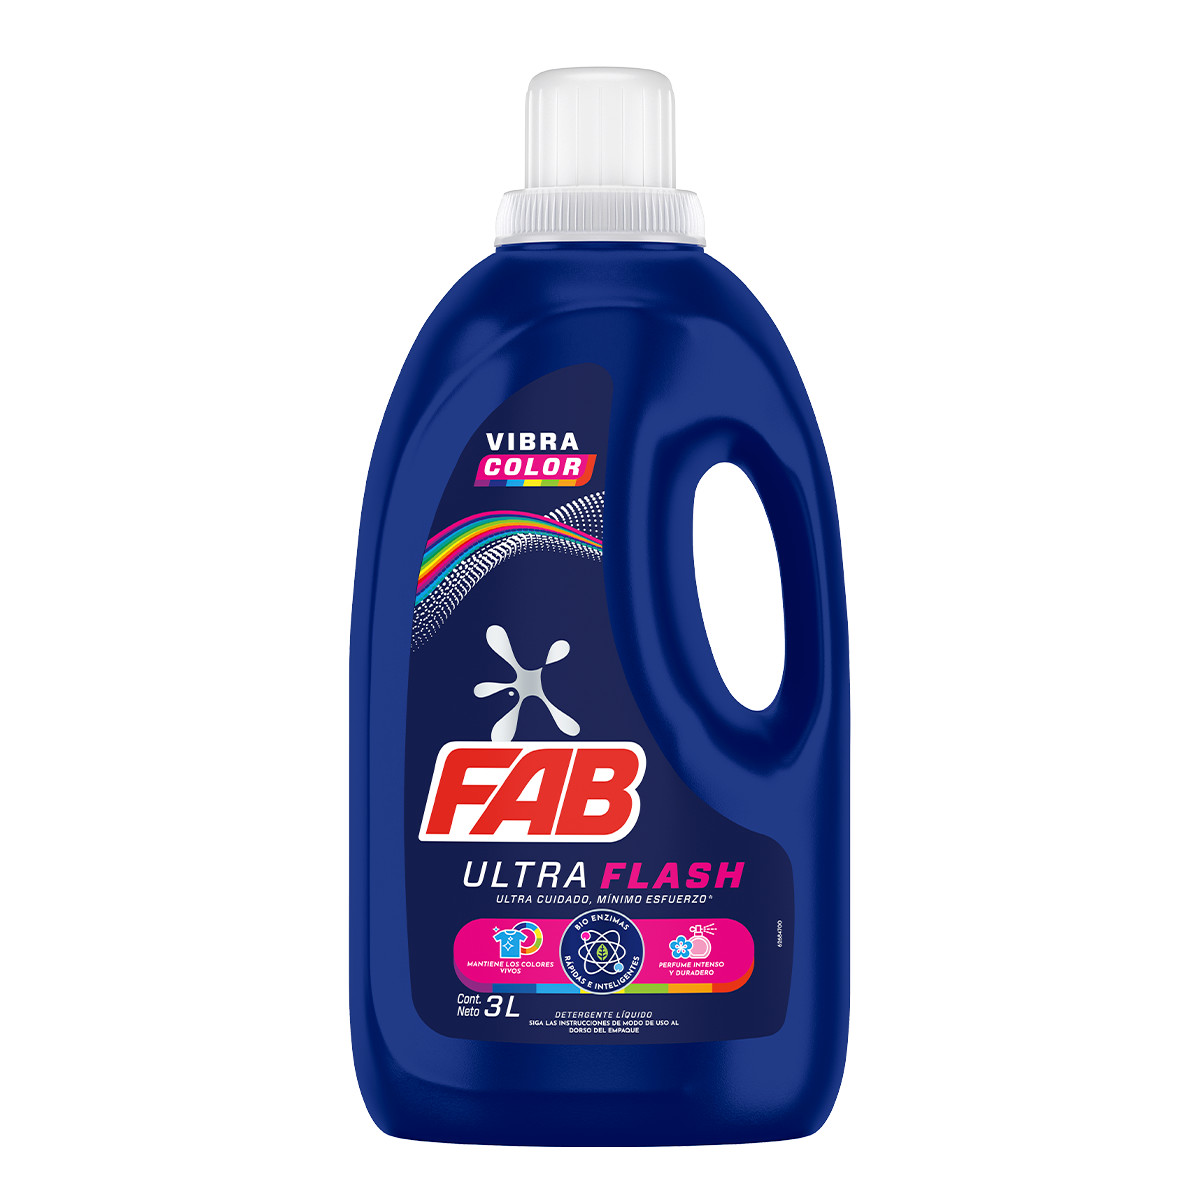 FAB VIBRA Color Botella pack shot